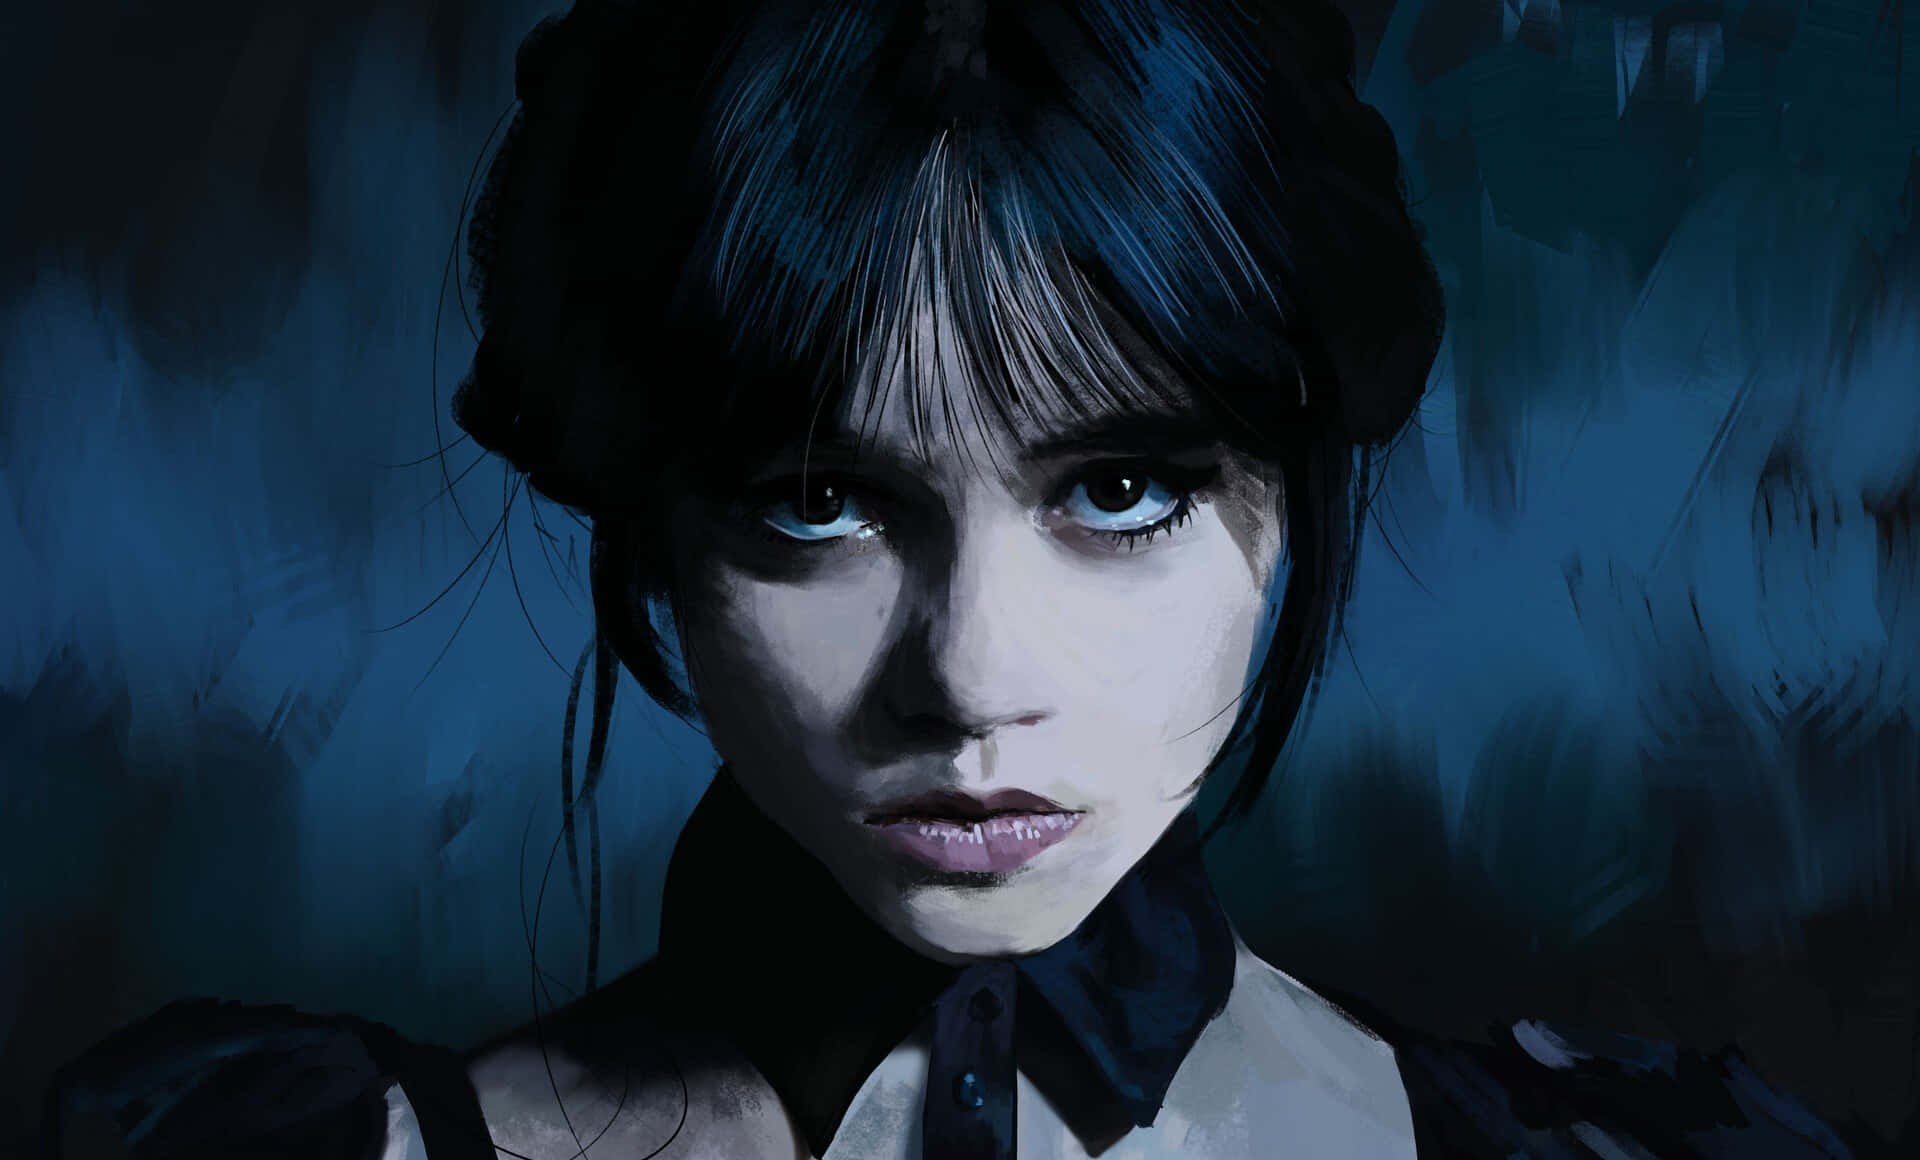 Mysterious Gothic Girl Portrait Wallpaper